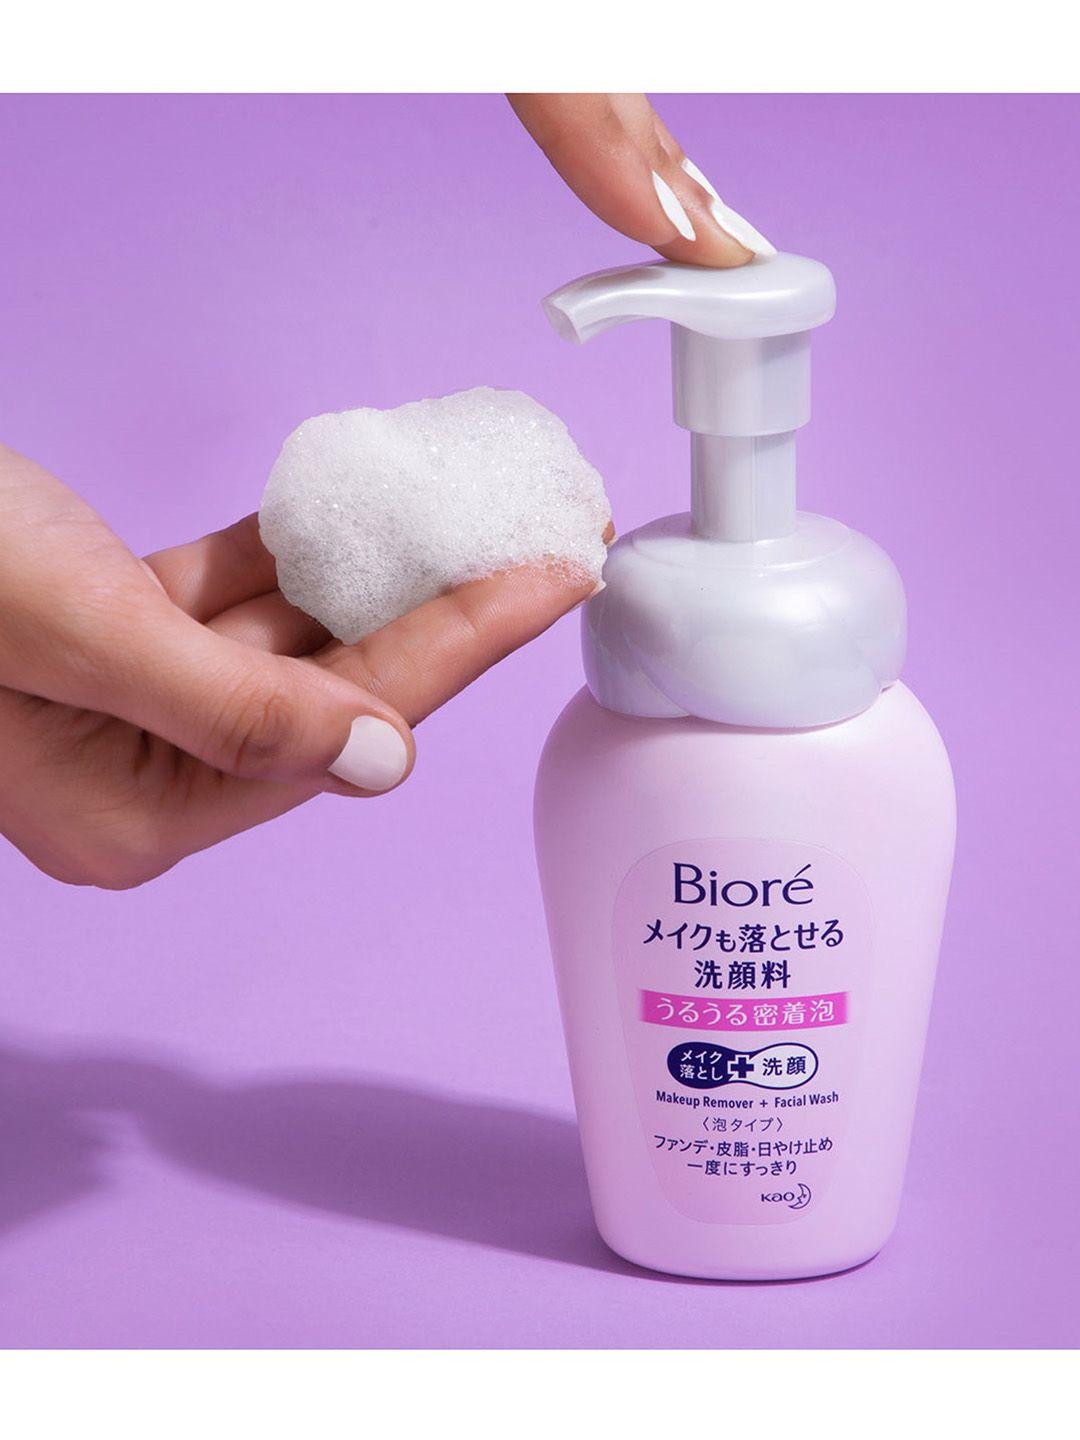 biore makeup remover cleansing wash foam - 160 ml